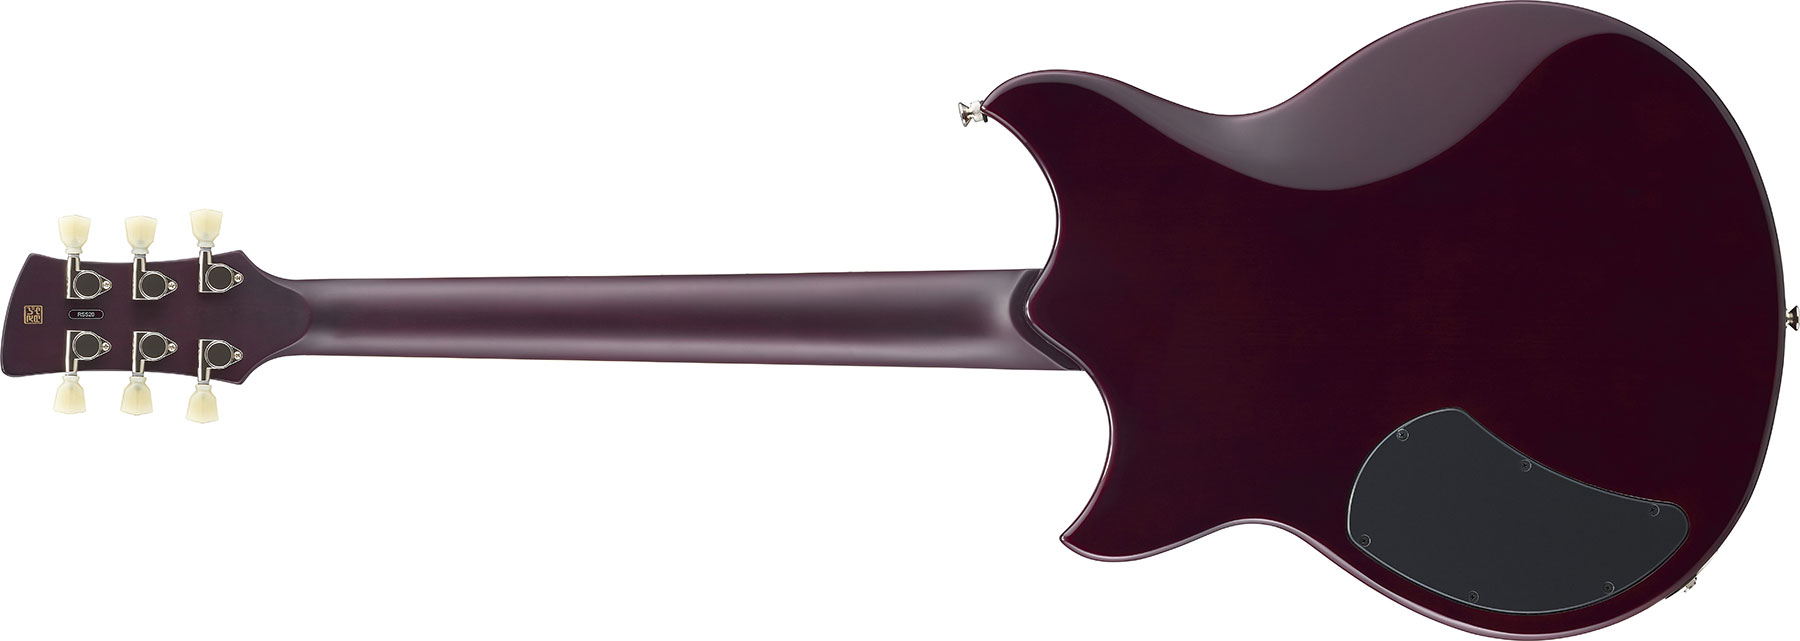 Yamaha Rss20 Revstar Standard Hh Ht Rw - Hot Merlot - Double cut electric guitar - Variation 2